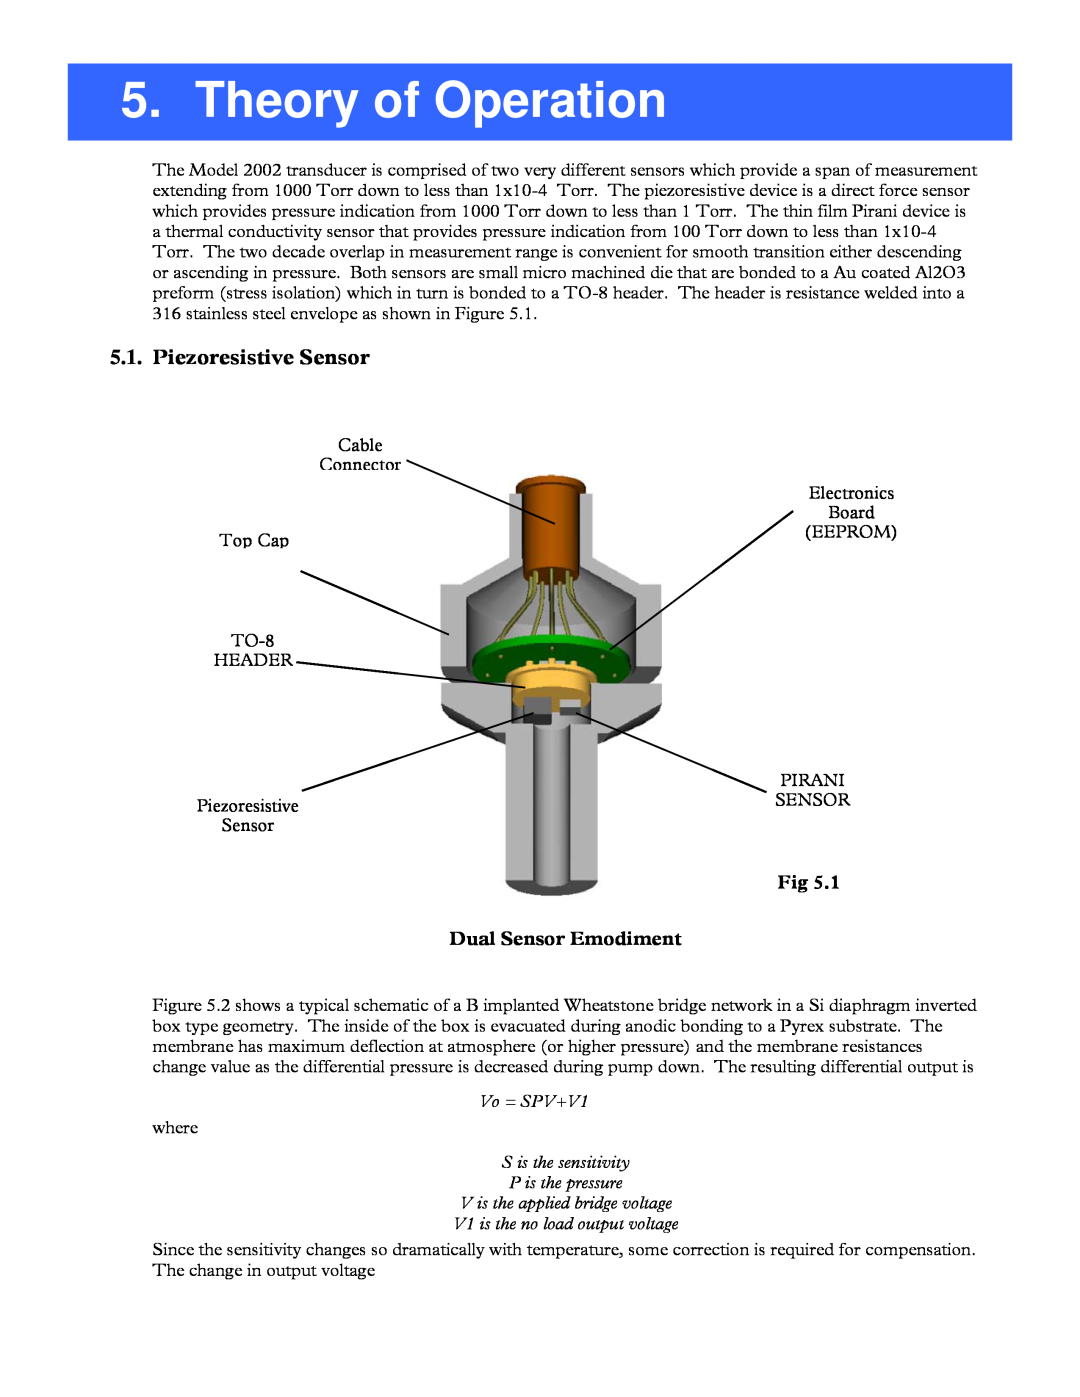 Teledyne 2002 instruction manual Theory of Operation, Piezoresistive Sensor, Fig Dual Sensor Emodiment 